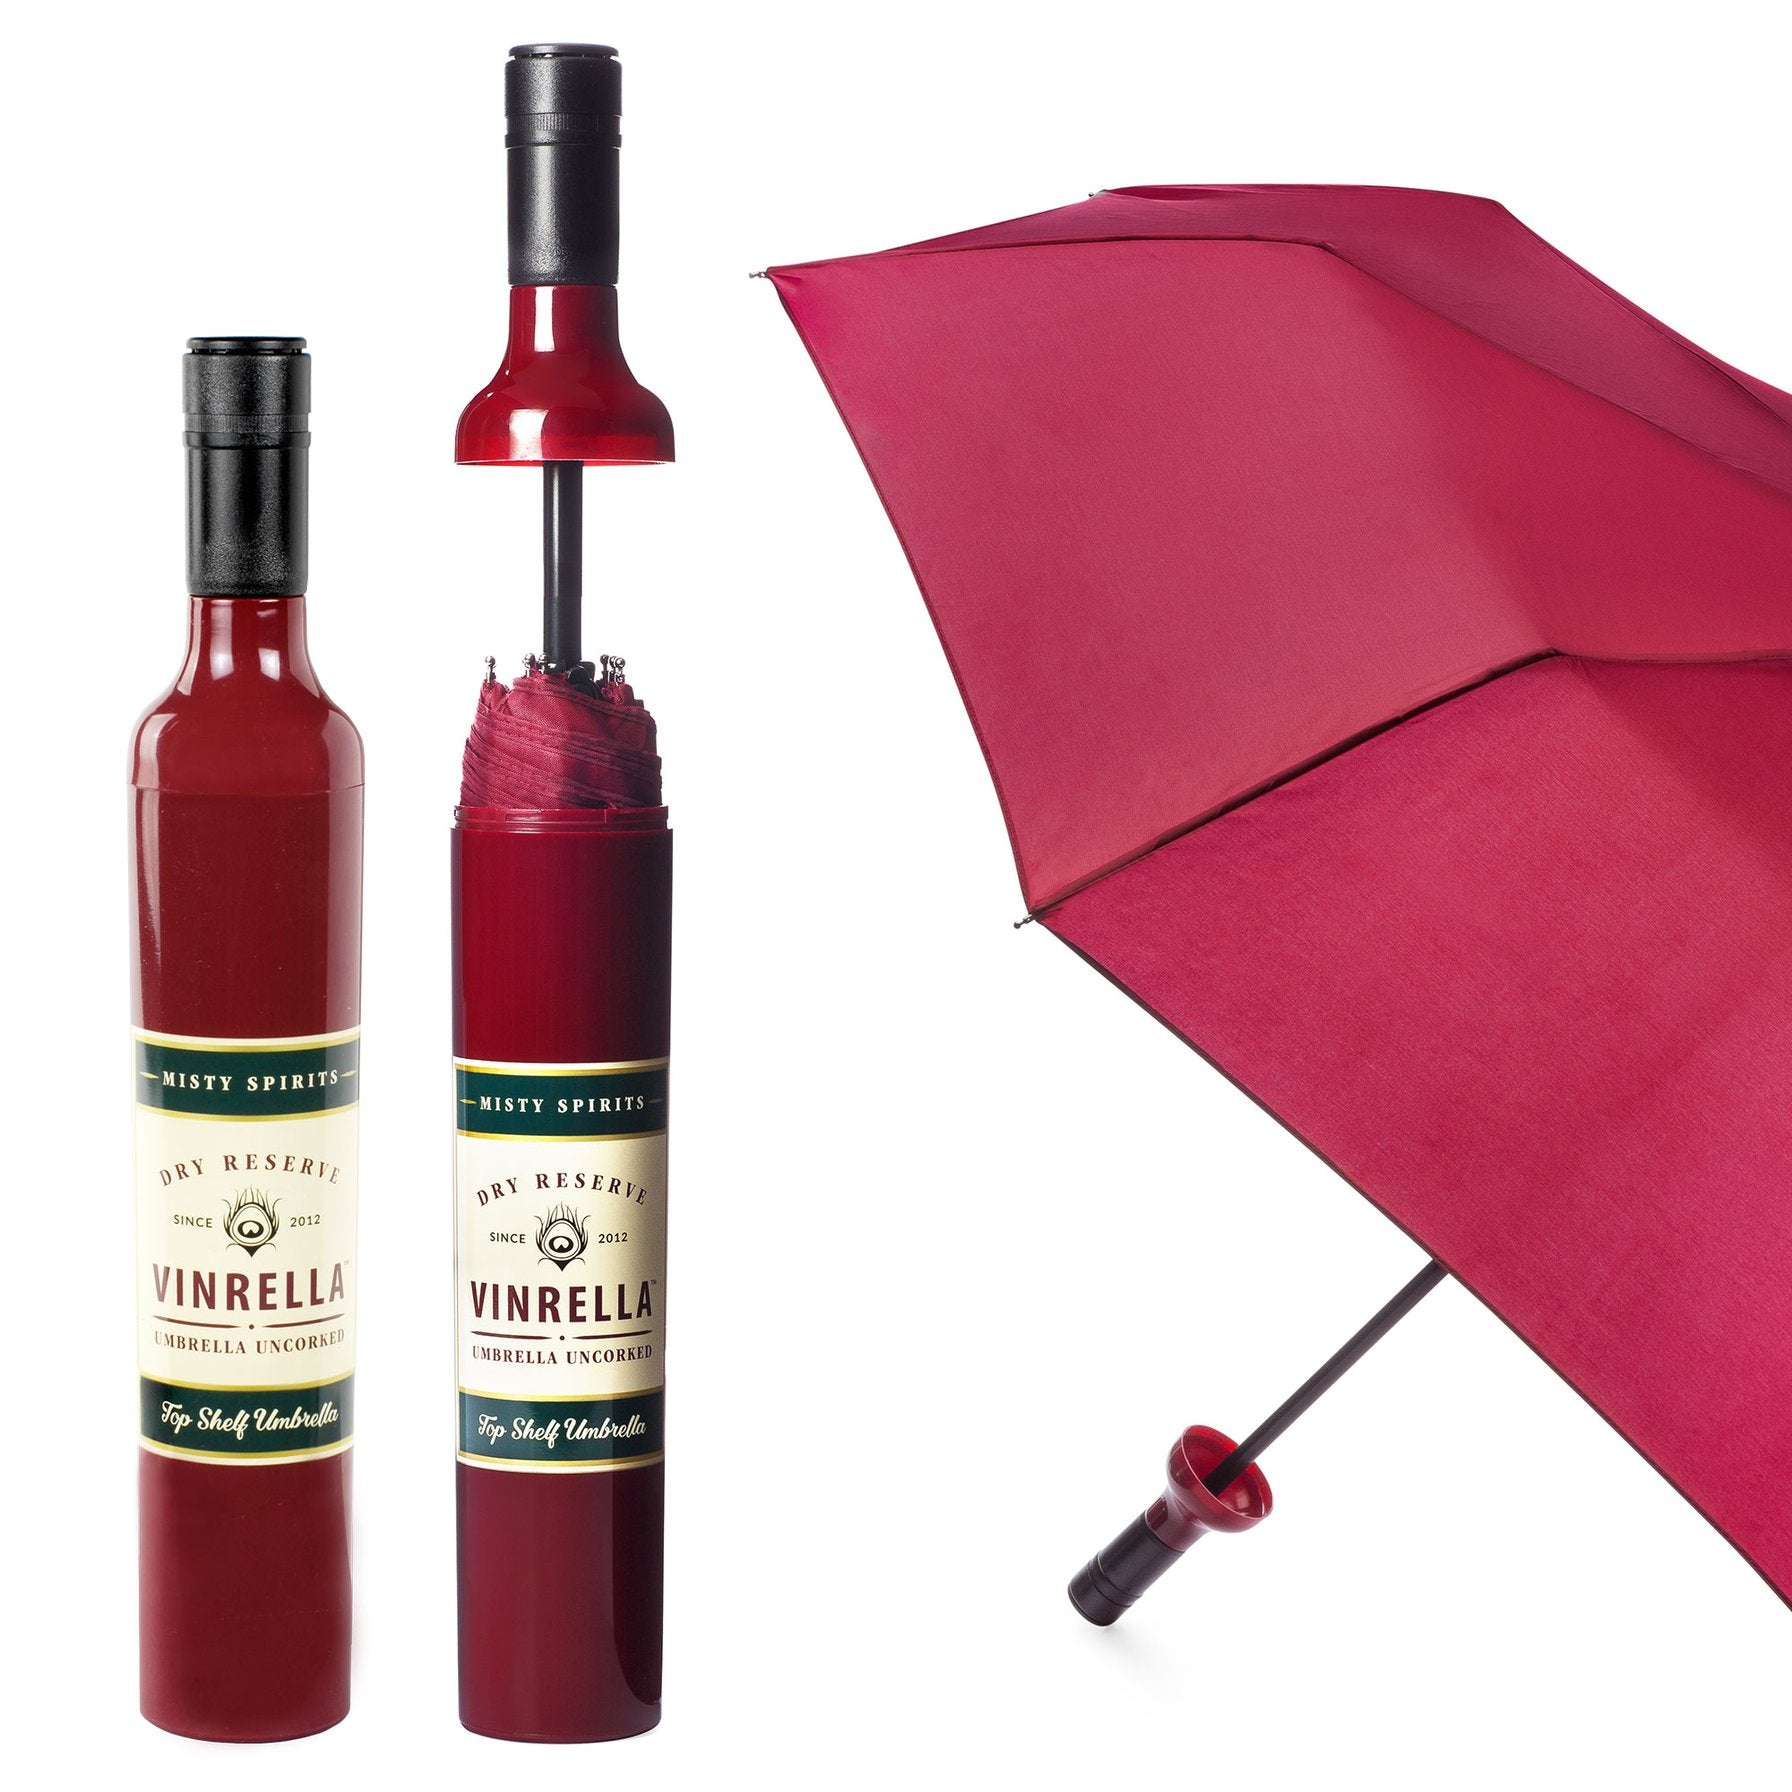 Vinrella burgundy wine bottle umbrella